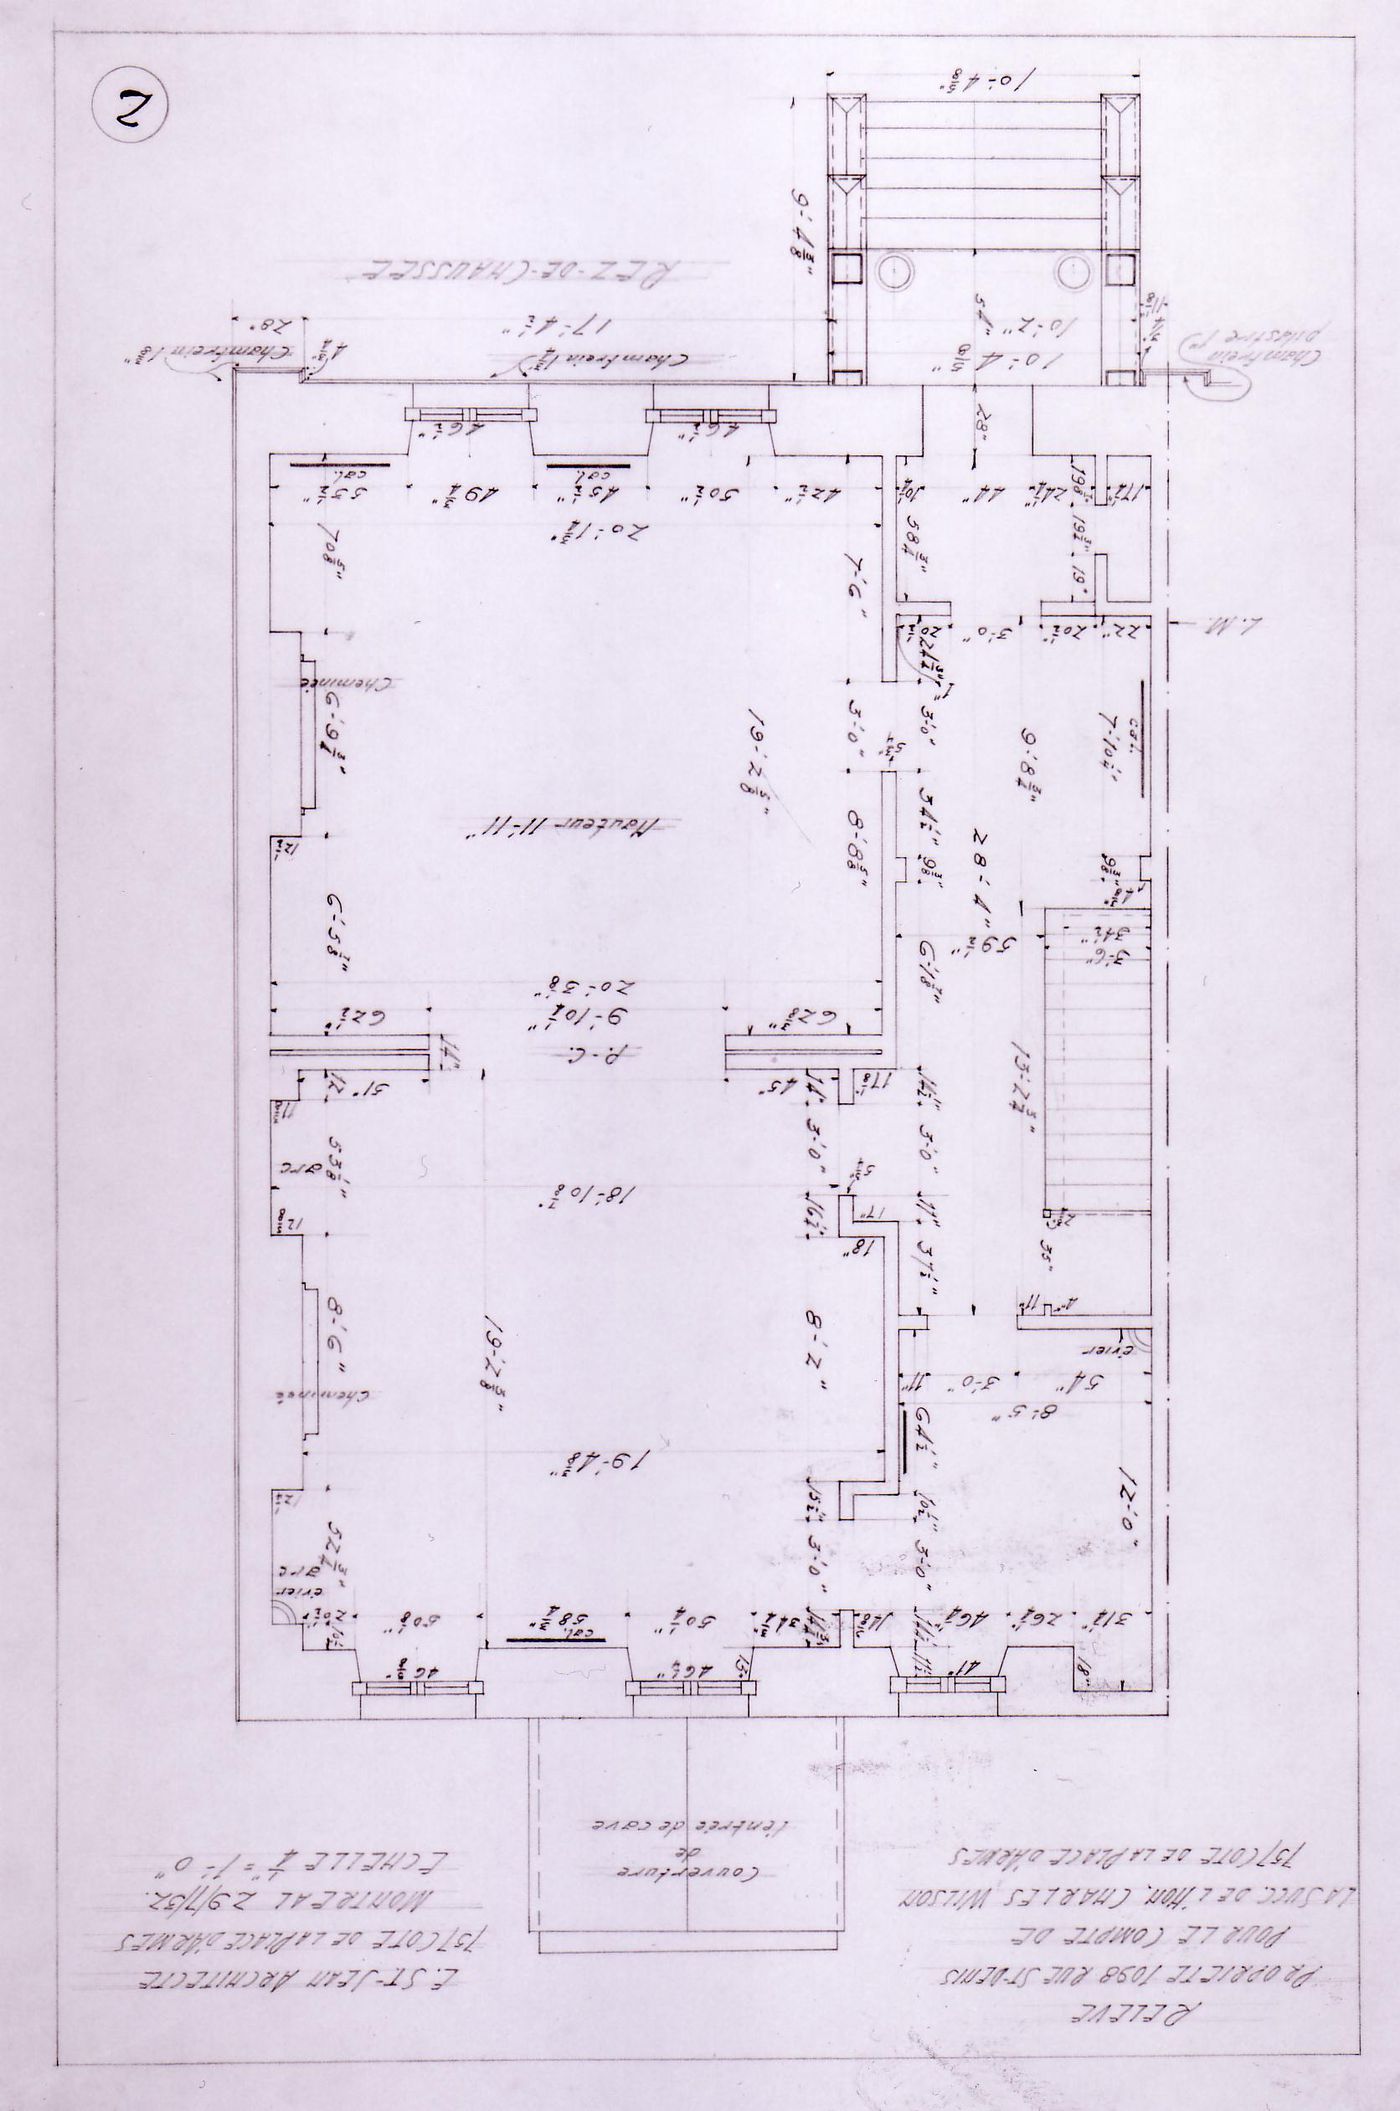 Ground floor plan of the Charles Wilson residence, 1098 rue Saint-Denis, Montréal